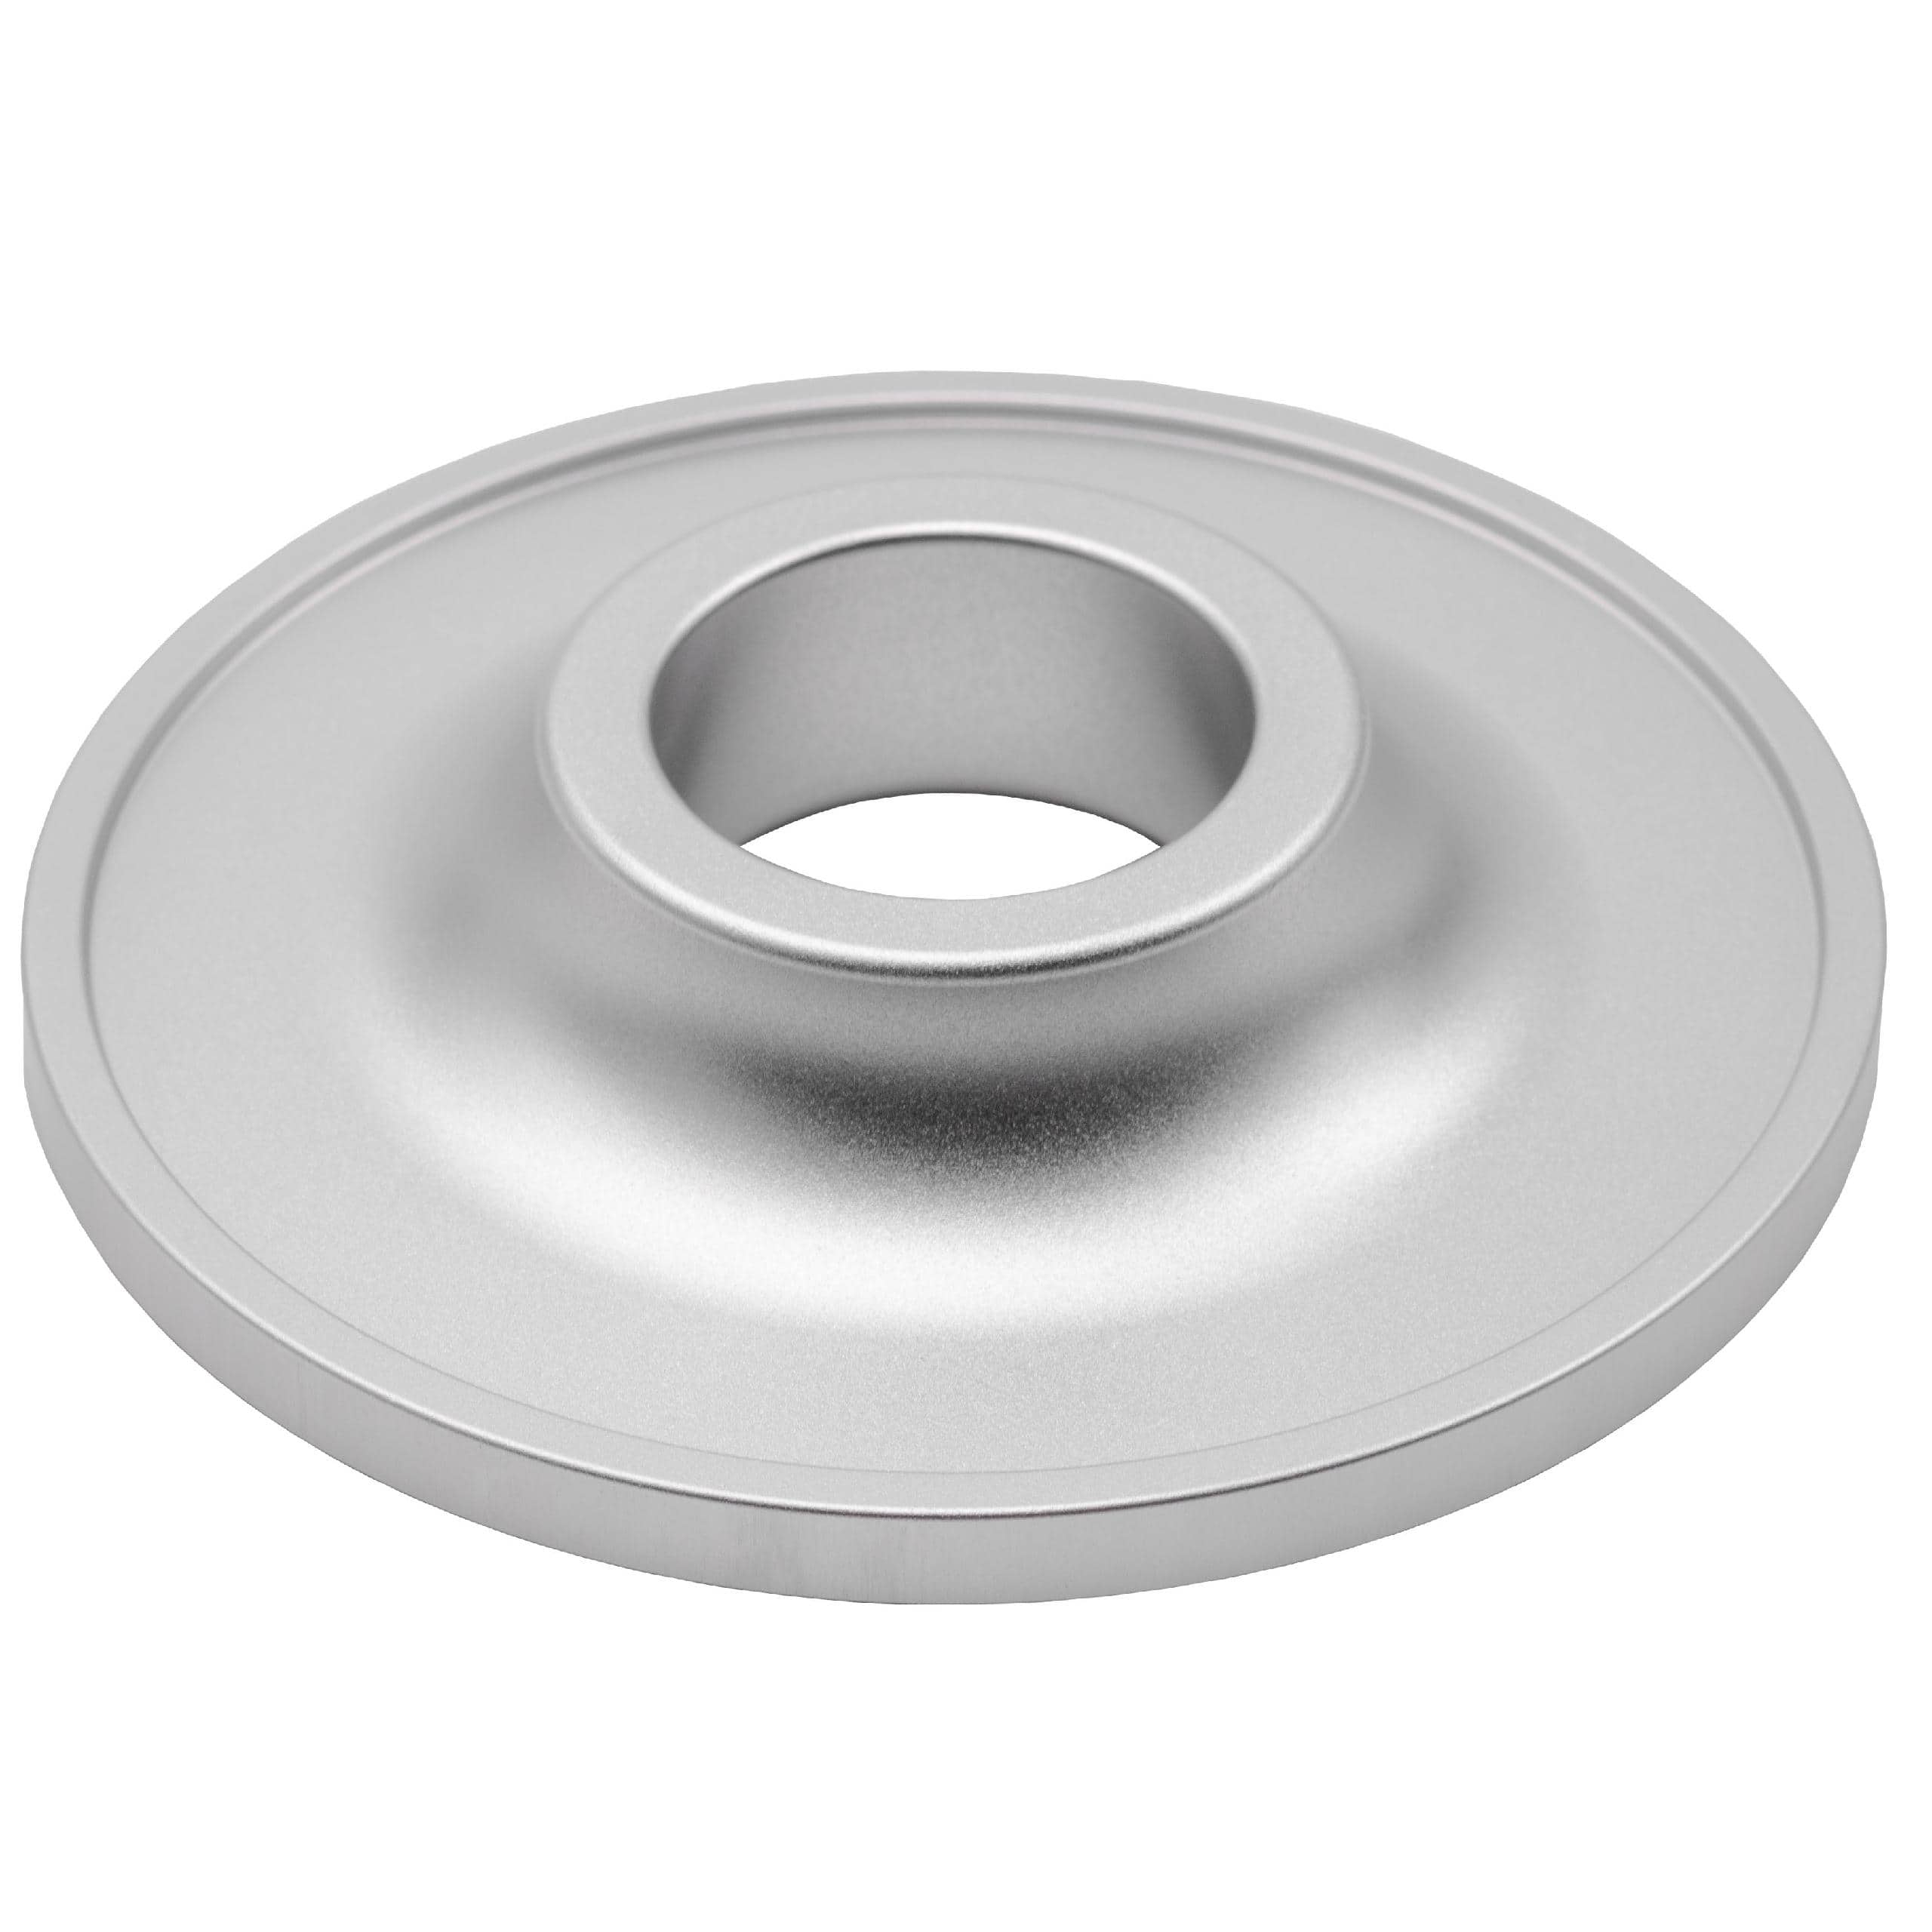 Podstawka do głośnika Apple HomePod - aluminium, srebrny